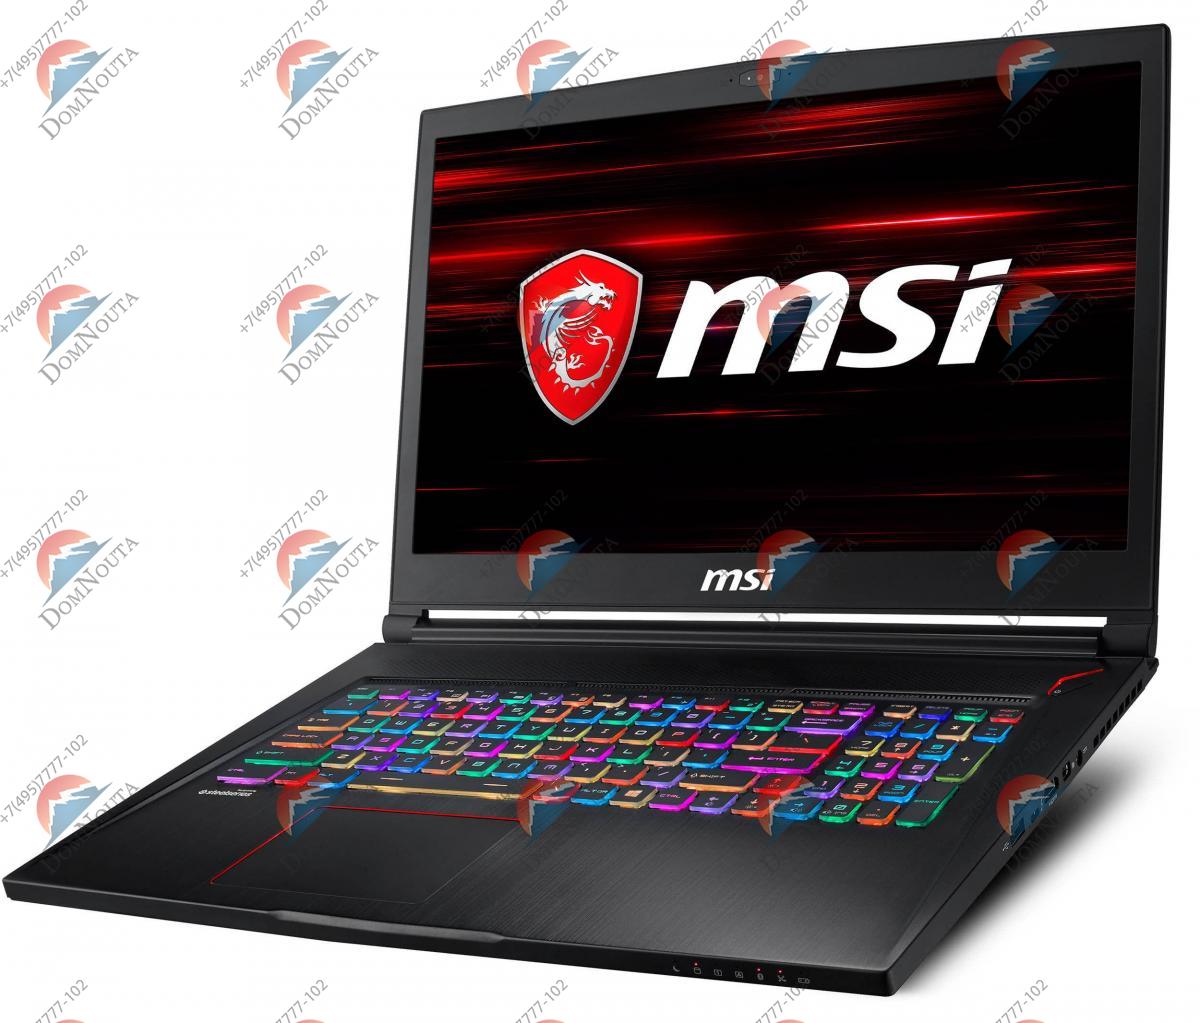 Ноутбук MSI GS73 8RE-019RU Stealth